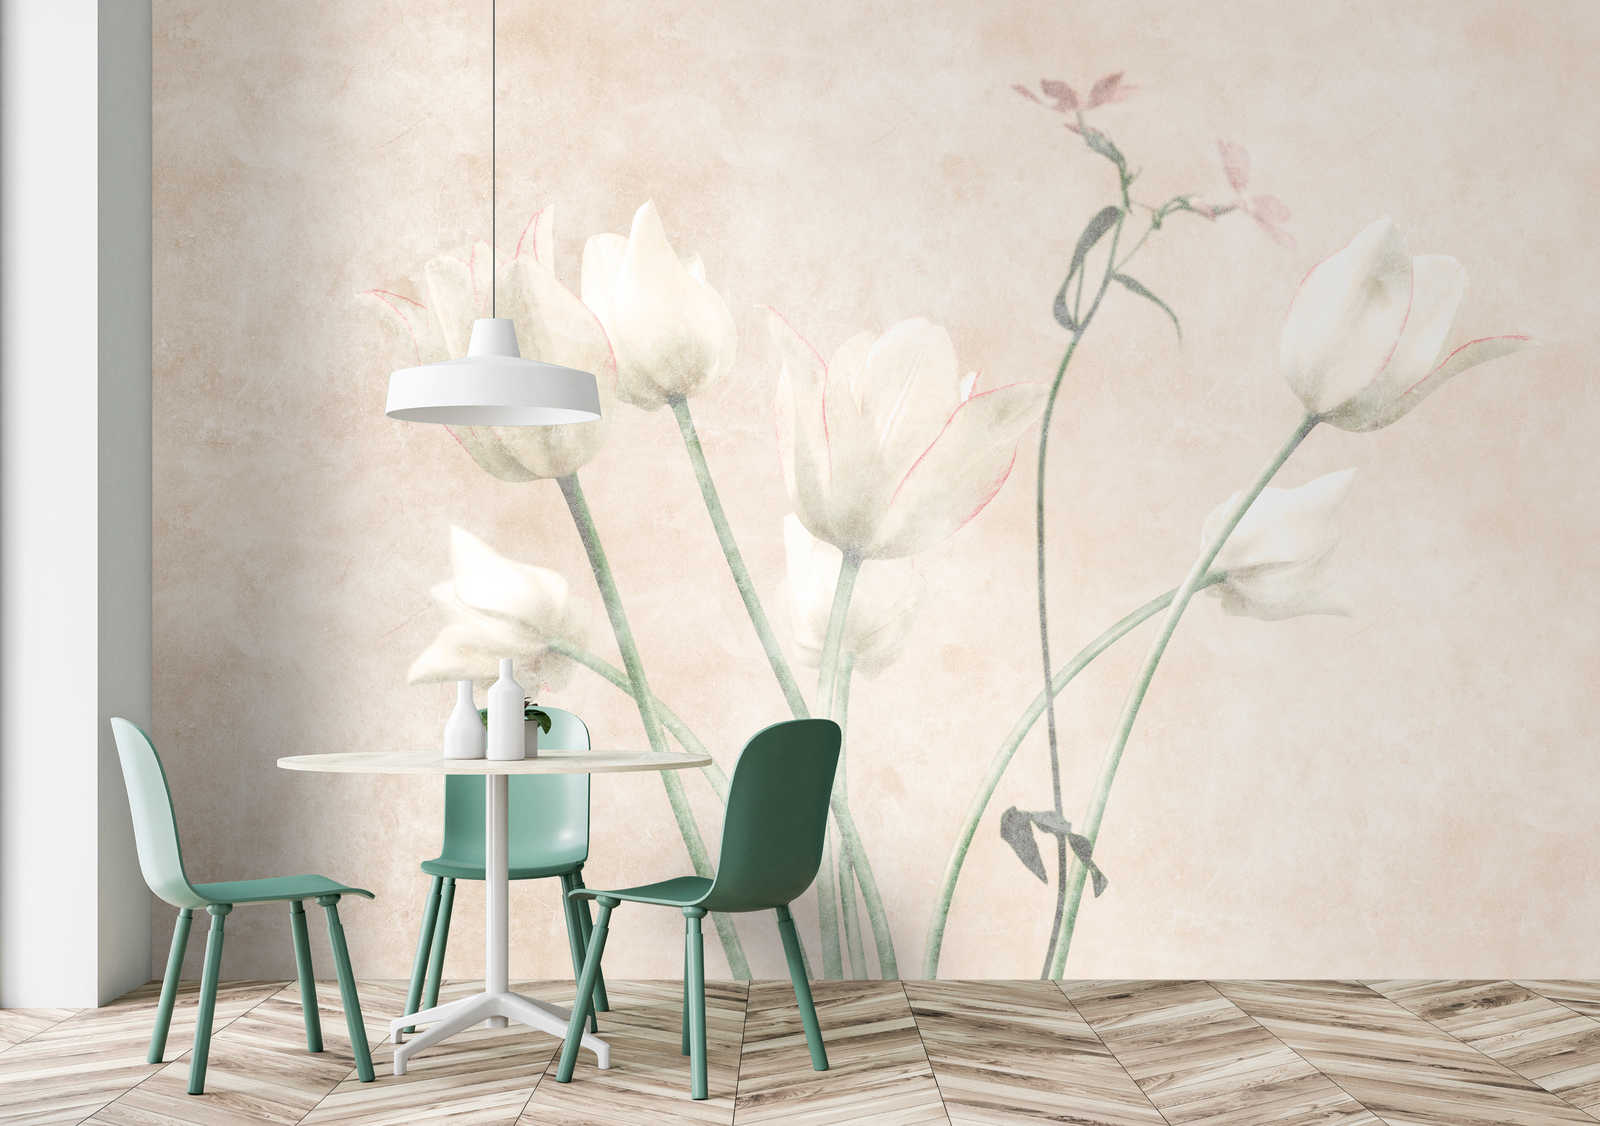             Morning Room 3 - Faded Style Bloemen Behang Tulpen
        